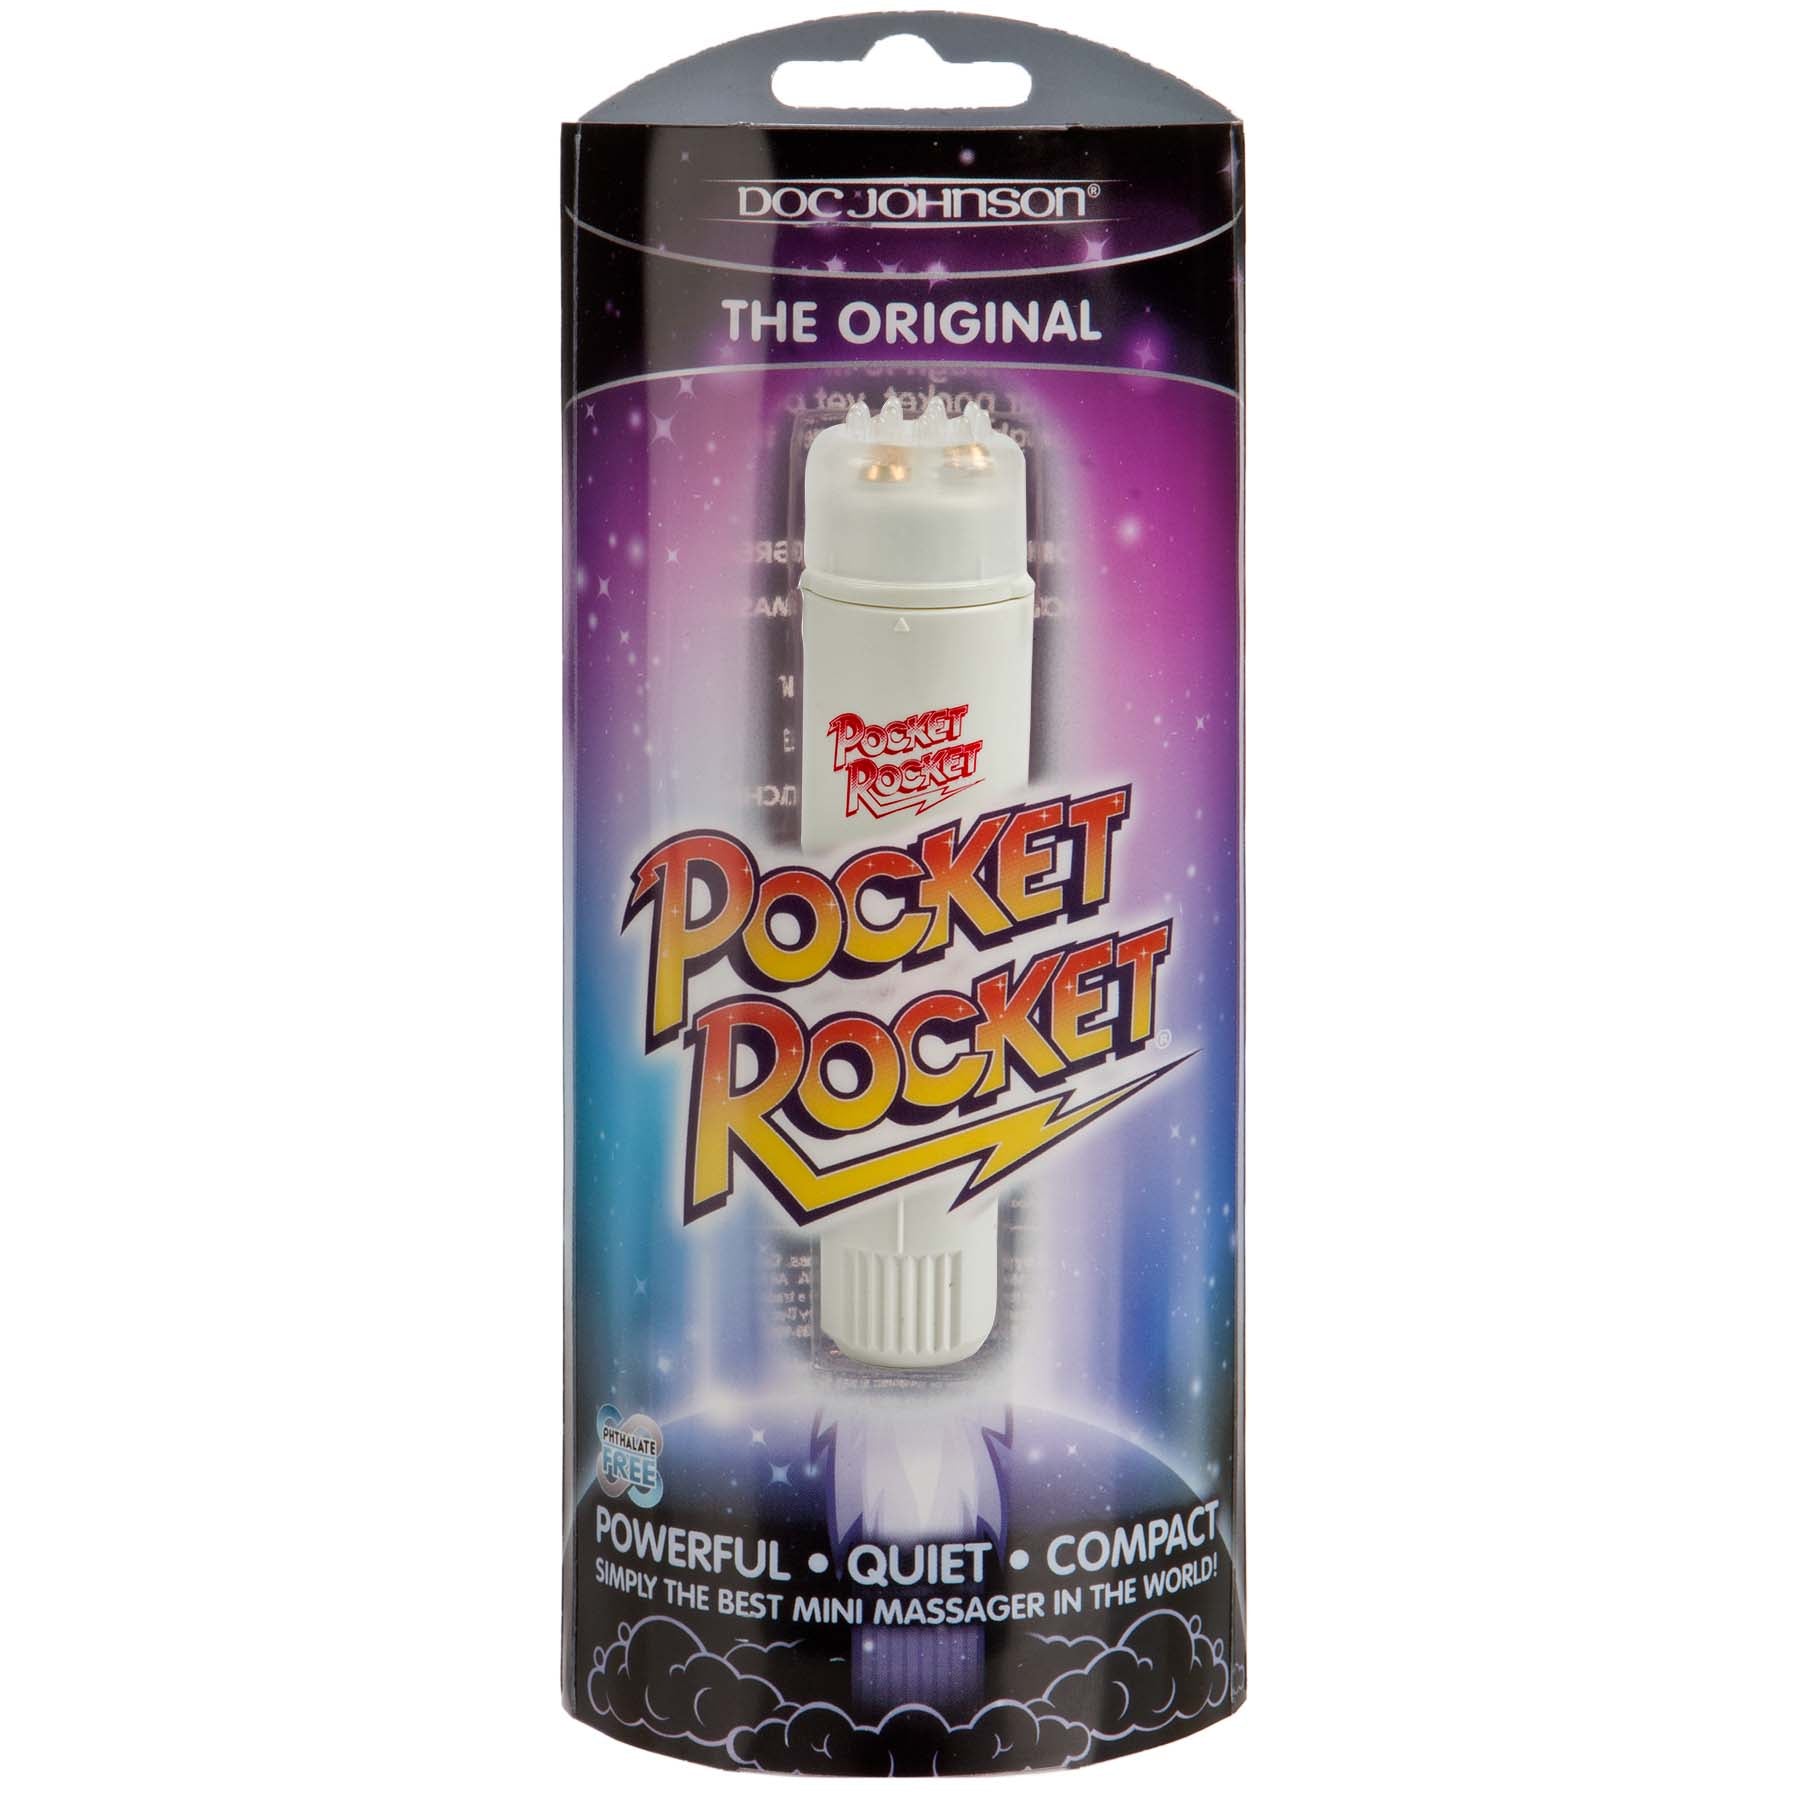 The Original Pocket Rocket - White